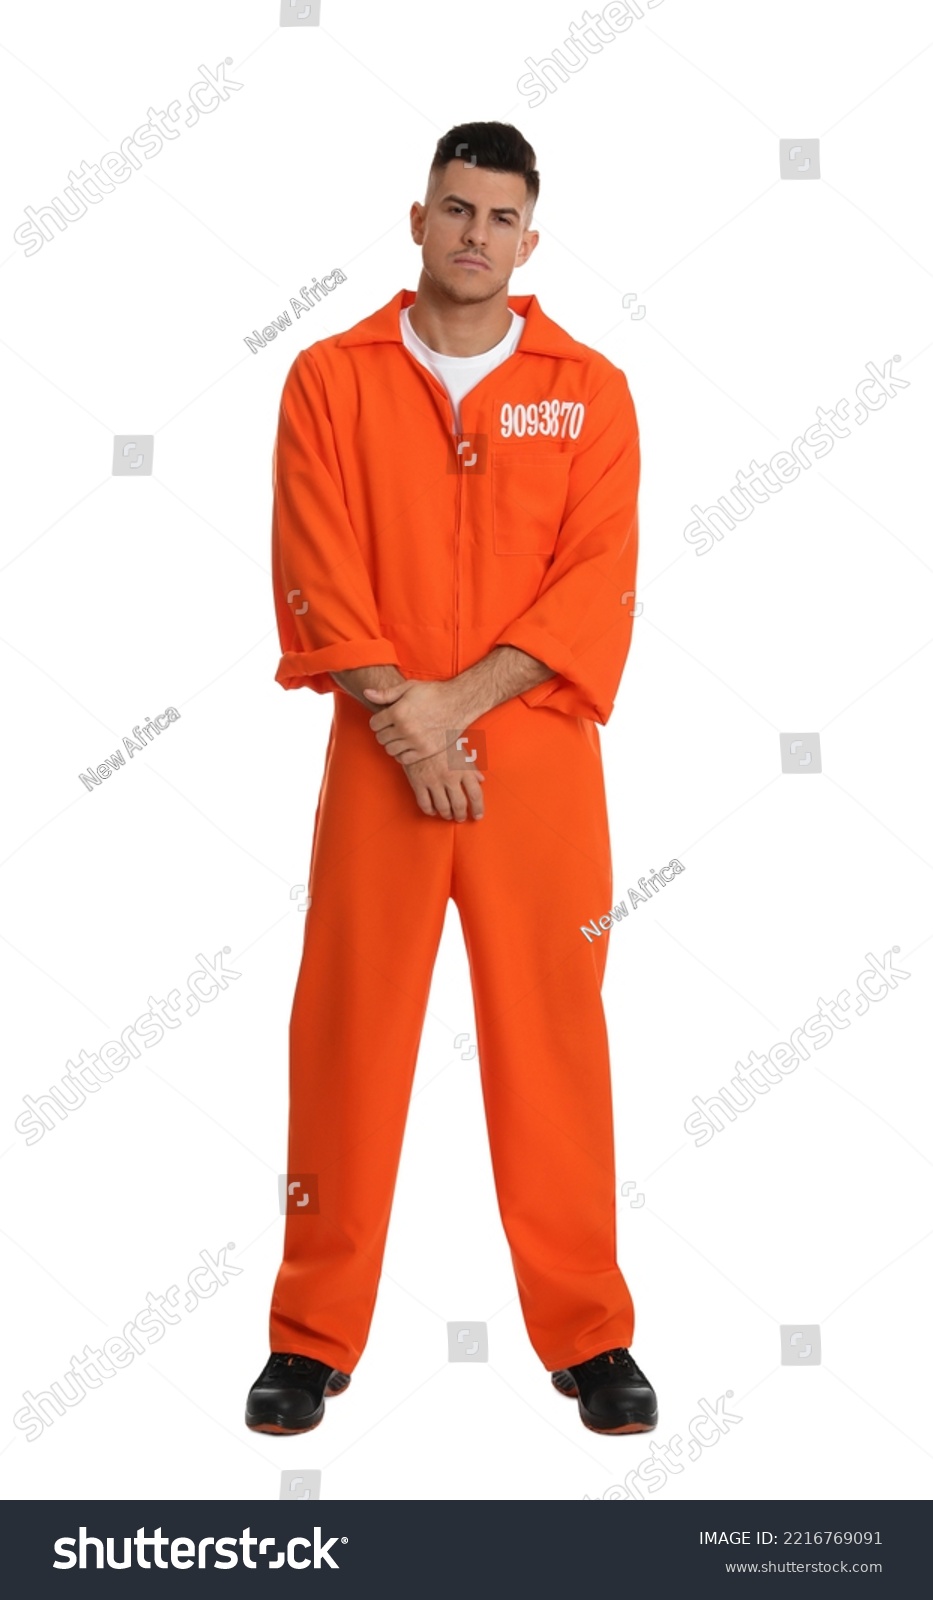 Prisoner in orange jumpsuit on white background #2216769091